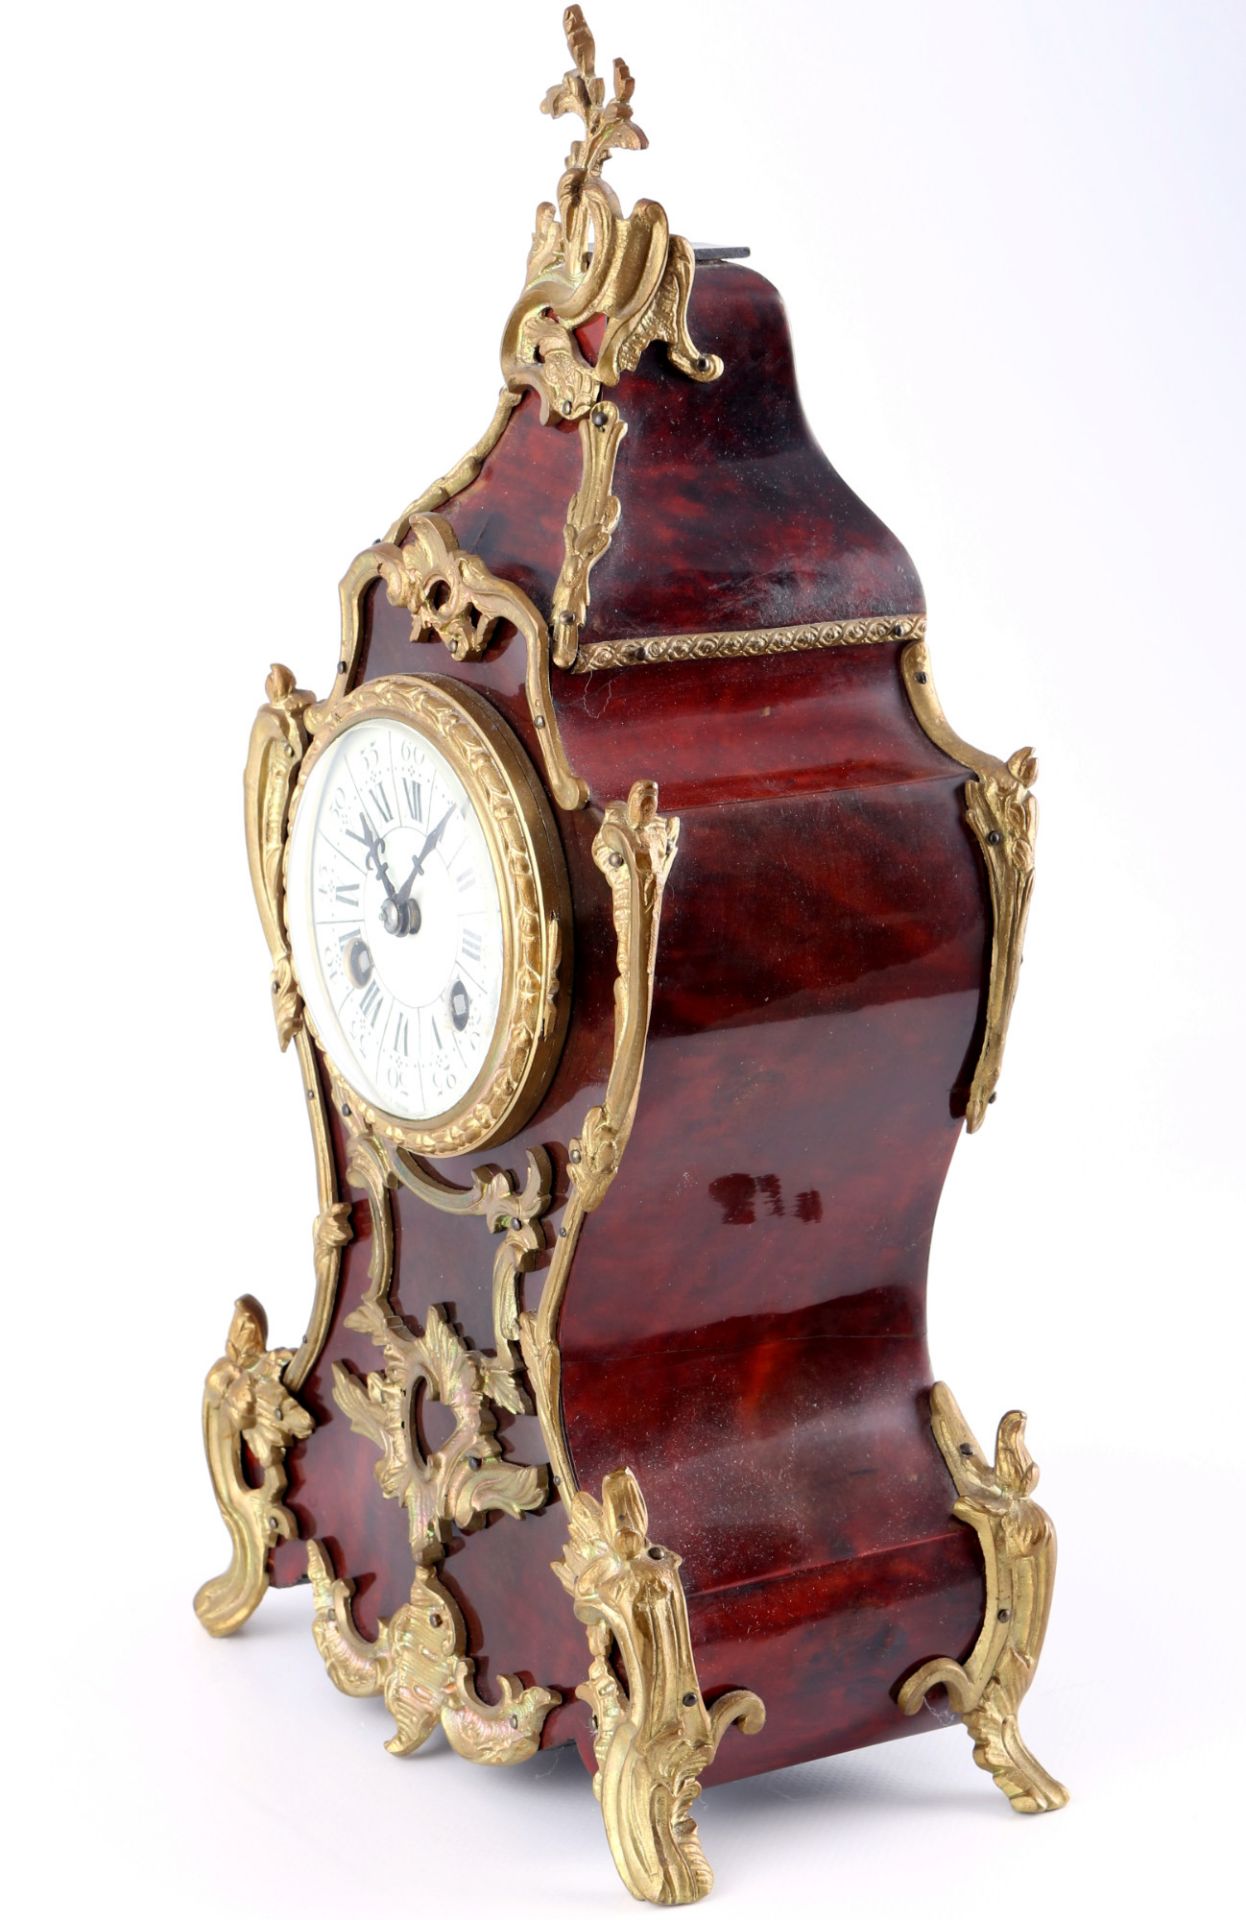 French mantel boulle mantel clock 19th century, Tischuhr / Boulleuhr, Frankreich 19. Jahrhundert, - Image 2 of 6